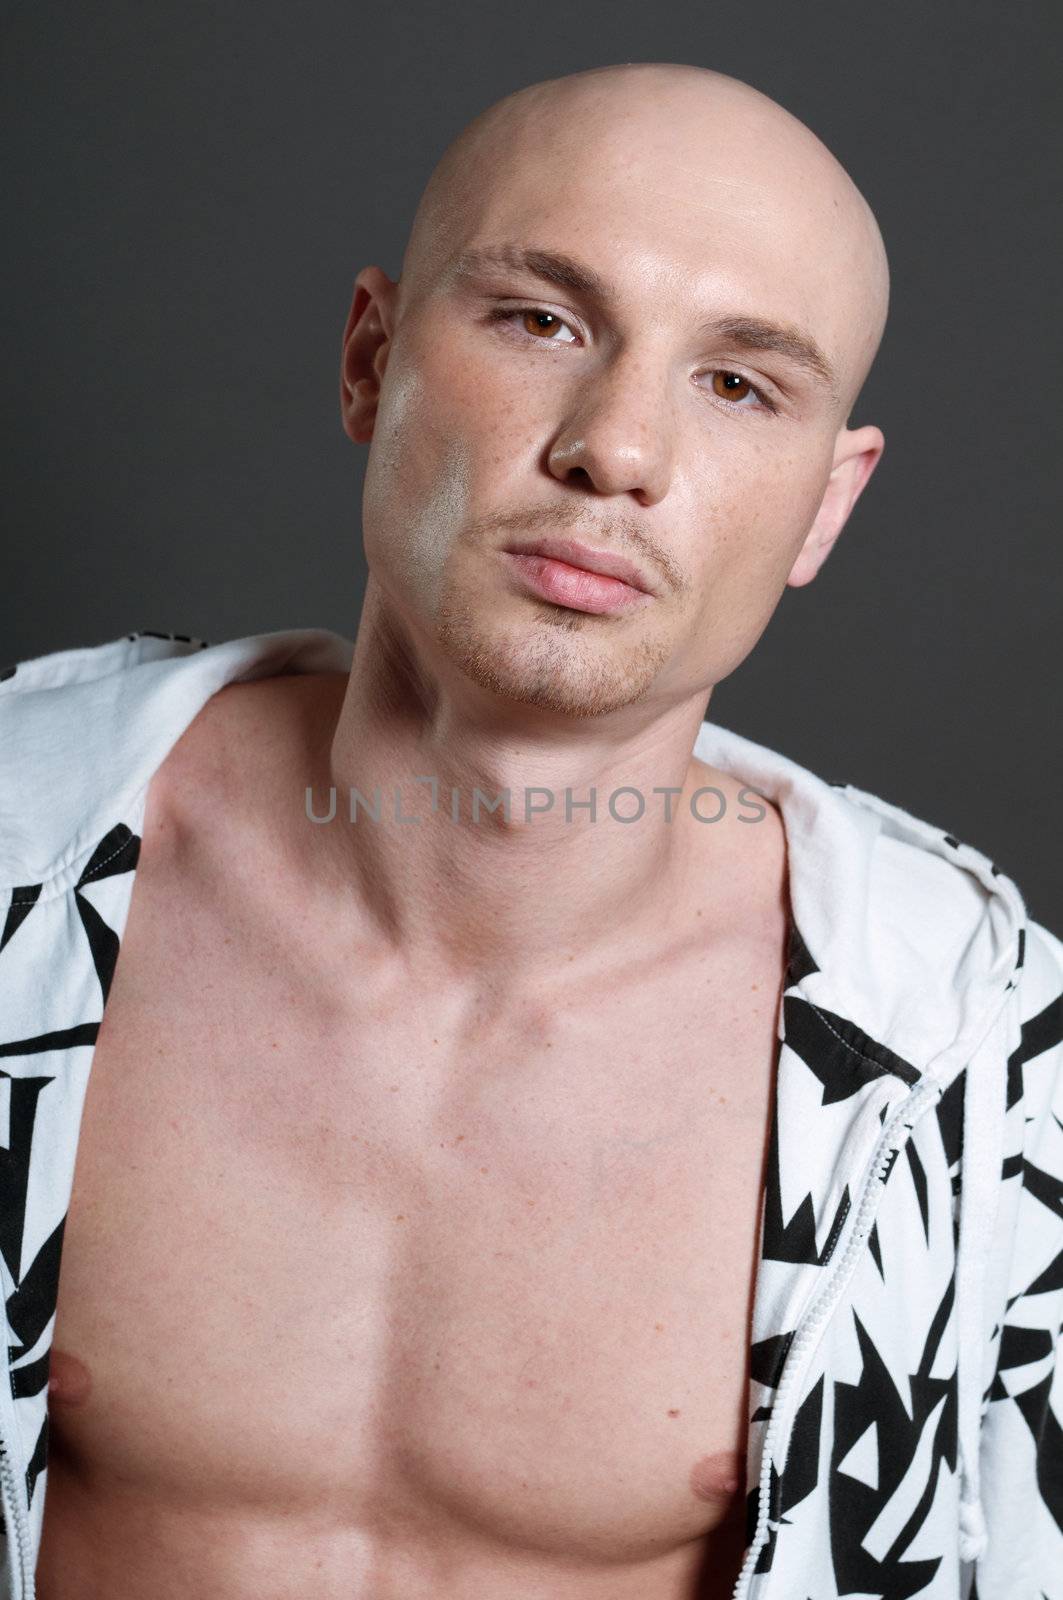 Studio portrait of shirtless muscled bald man